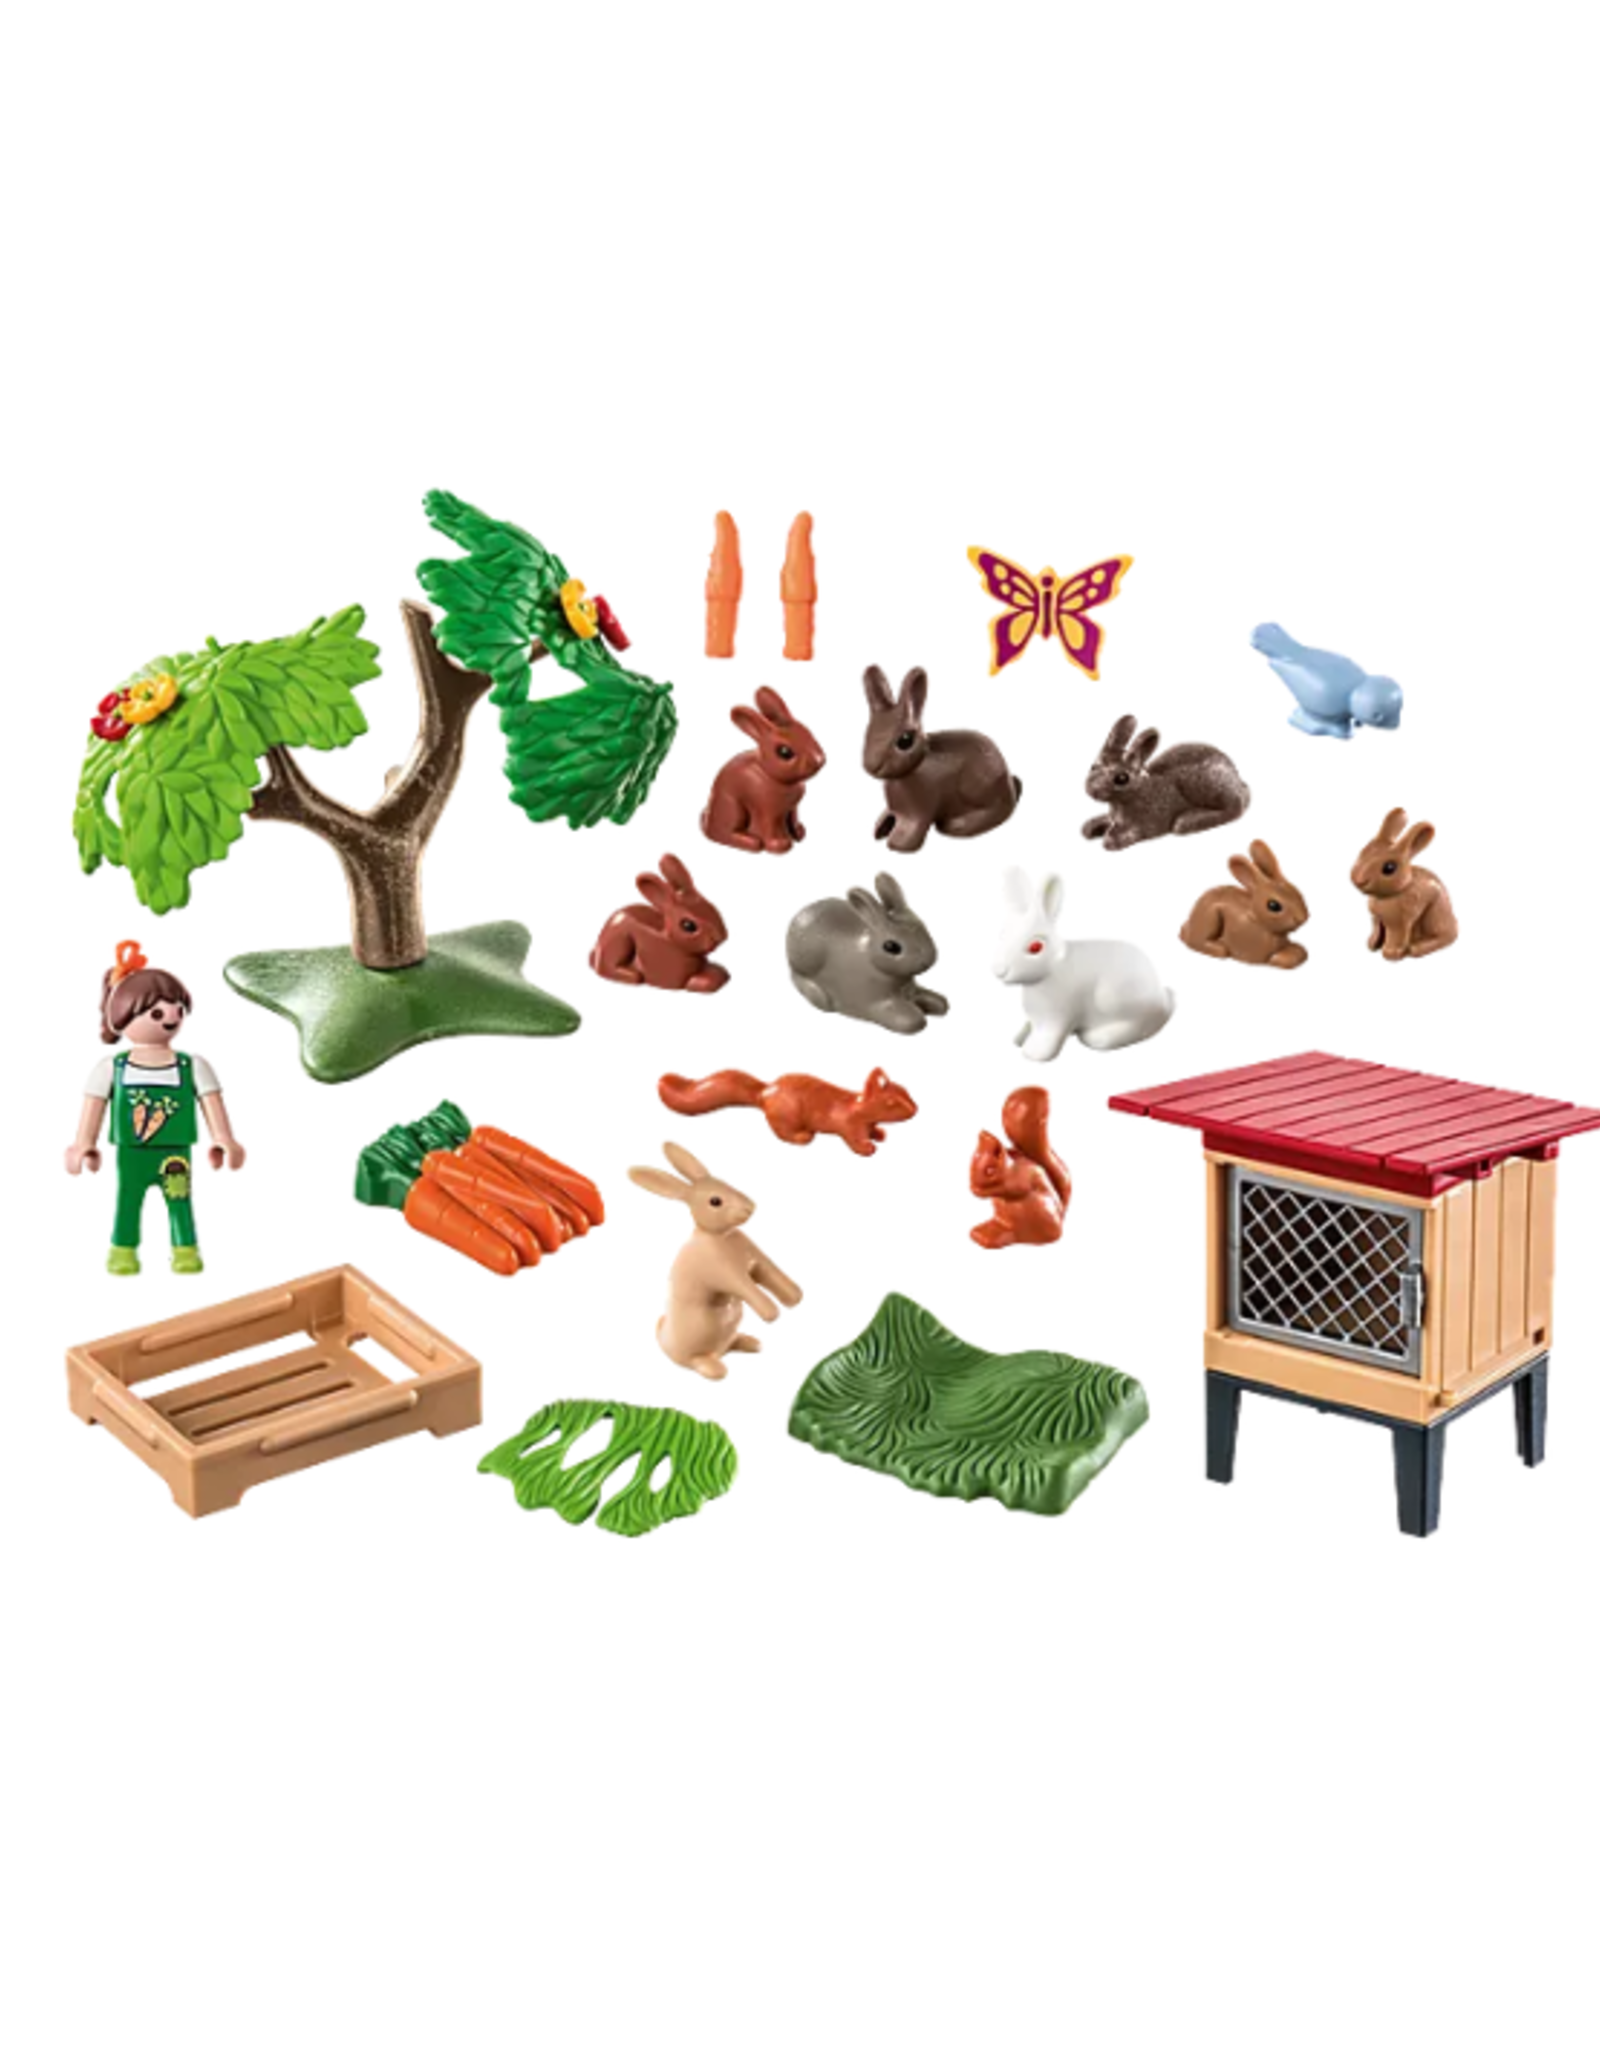 Playmobil Playmobil - Country - 71252 - Rabbit Hutch